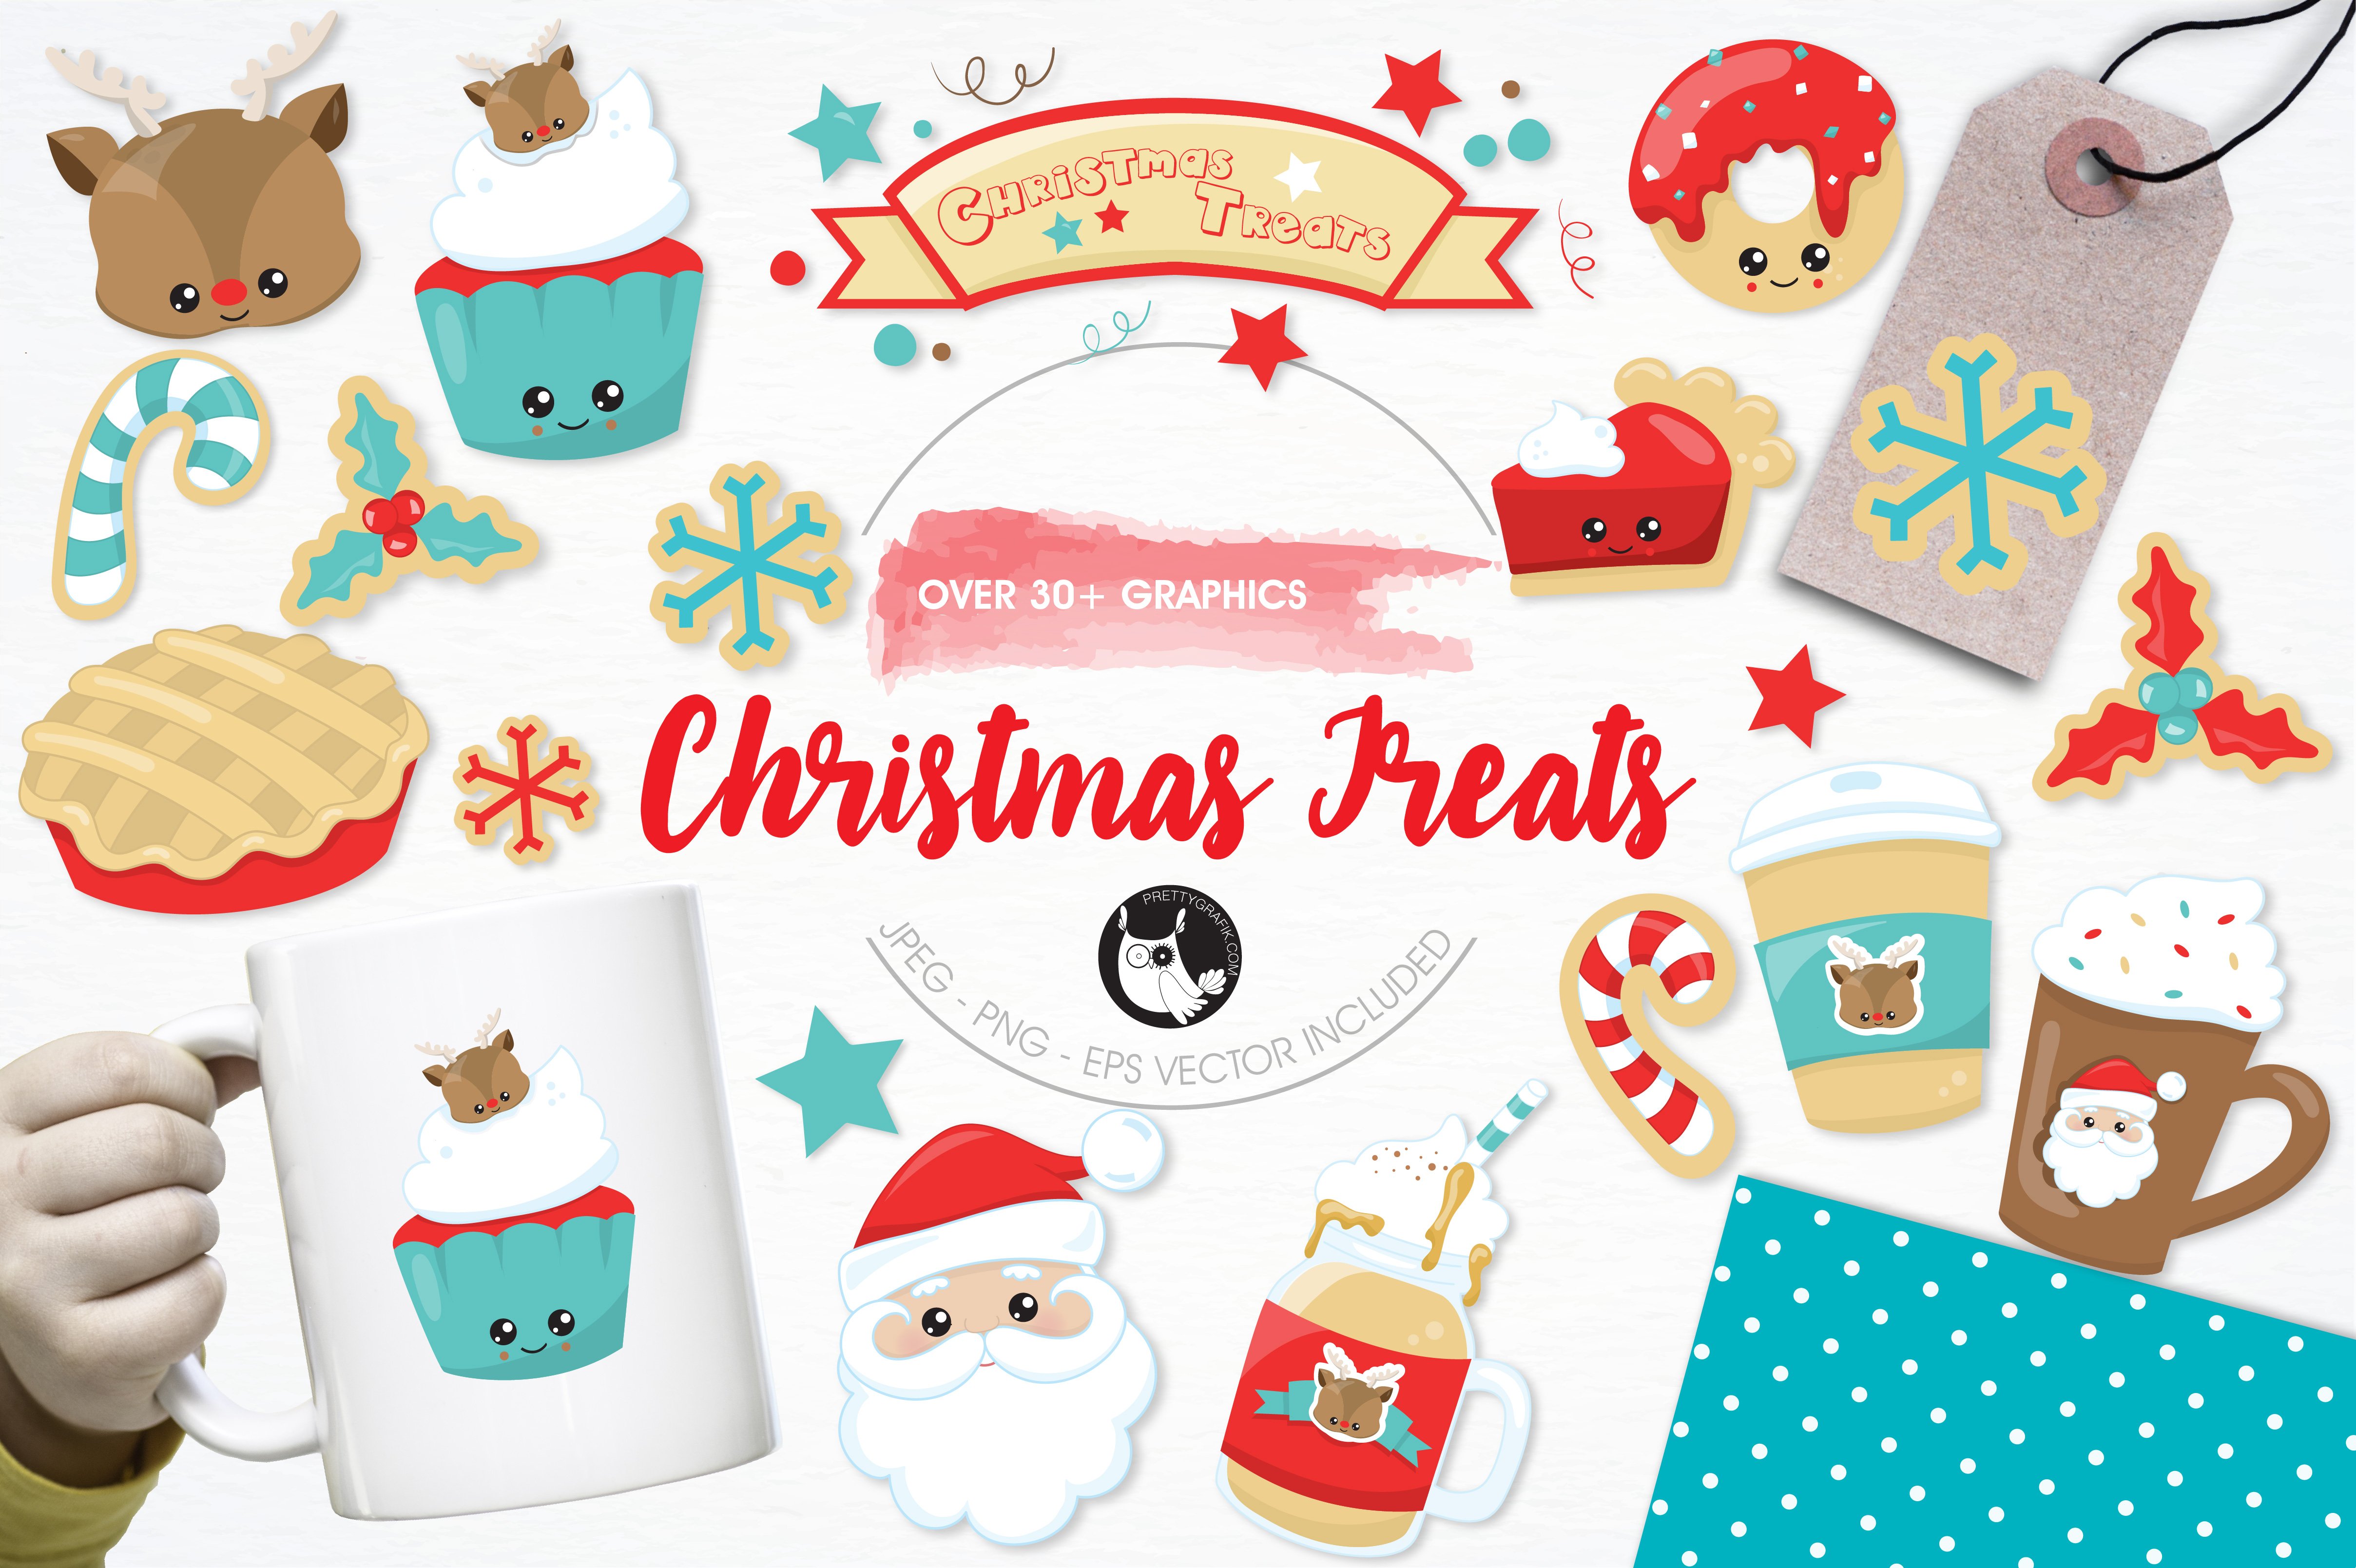 Christmas Treats Illustration Pack - Vector Image